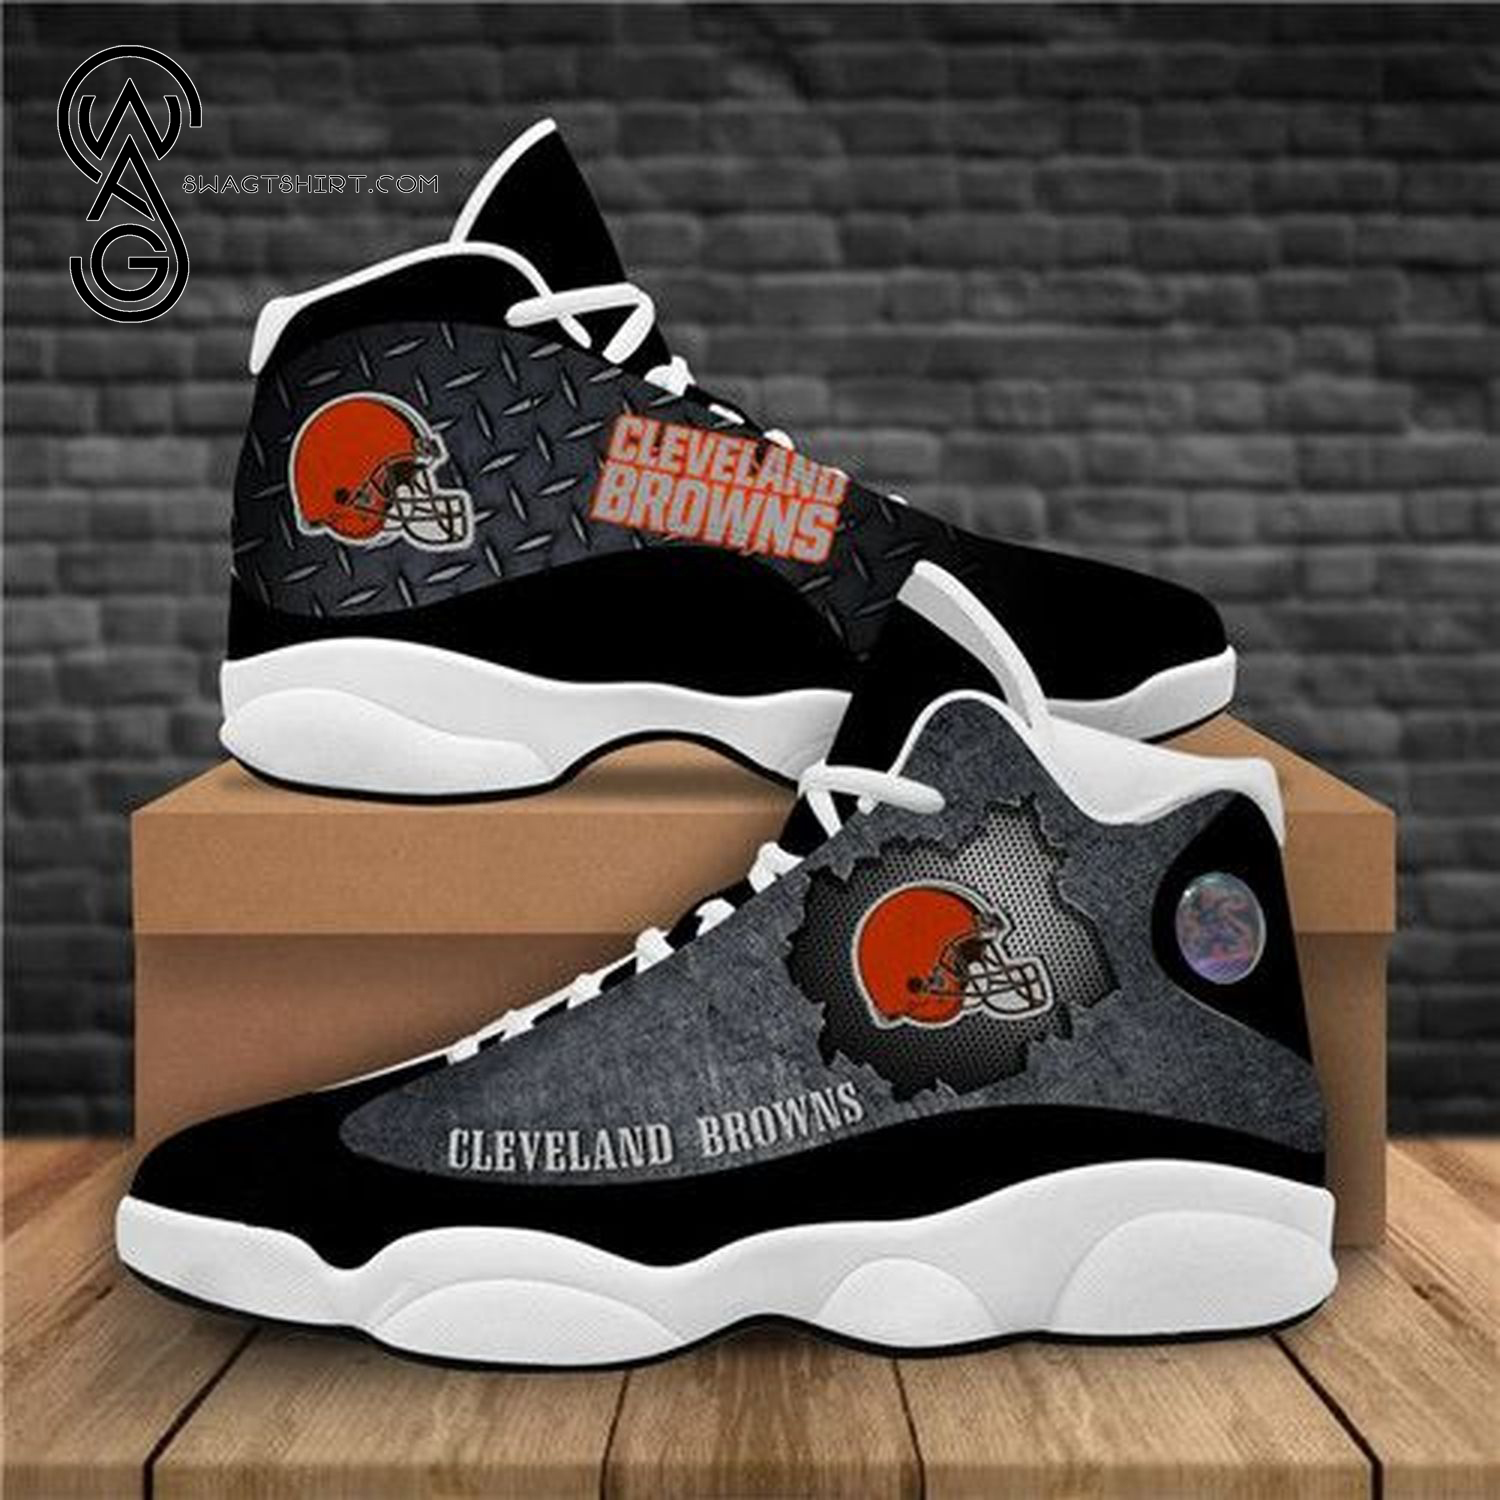 NFL Cleveland Browns Air Jordan 13 Shoes